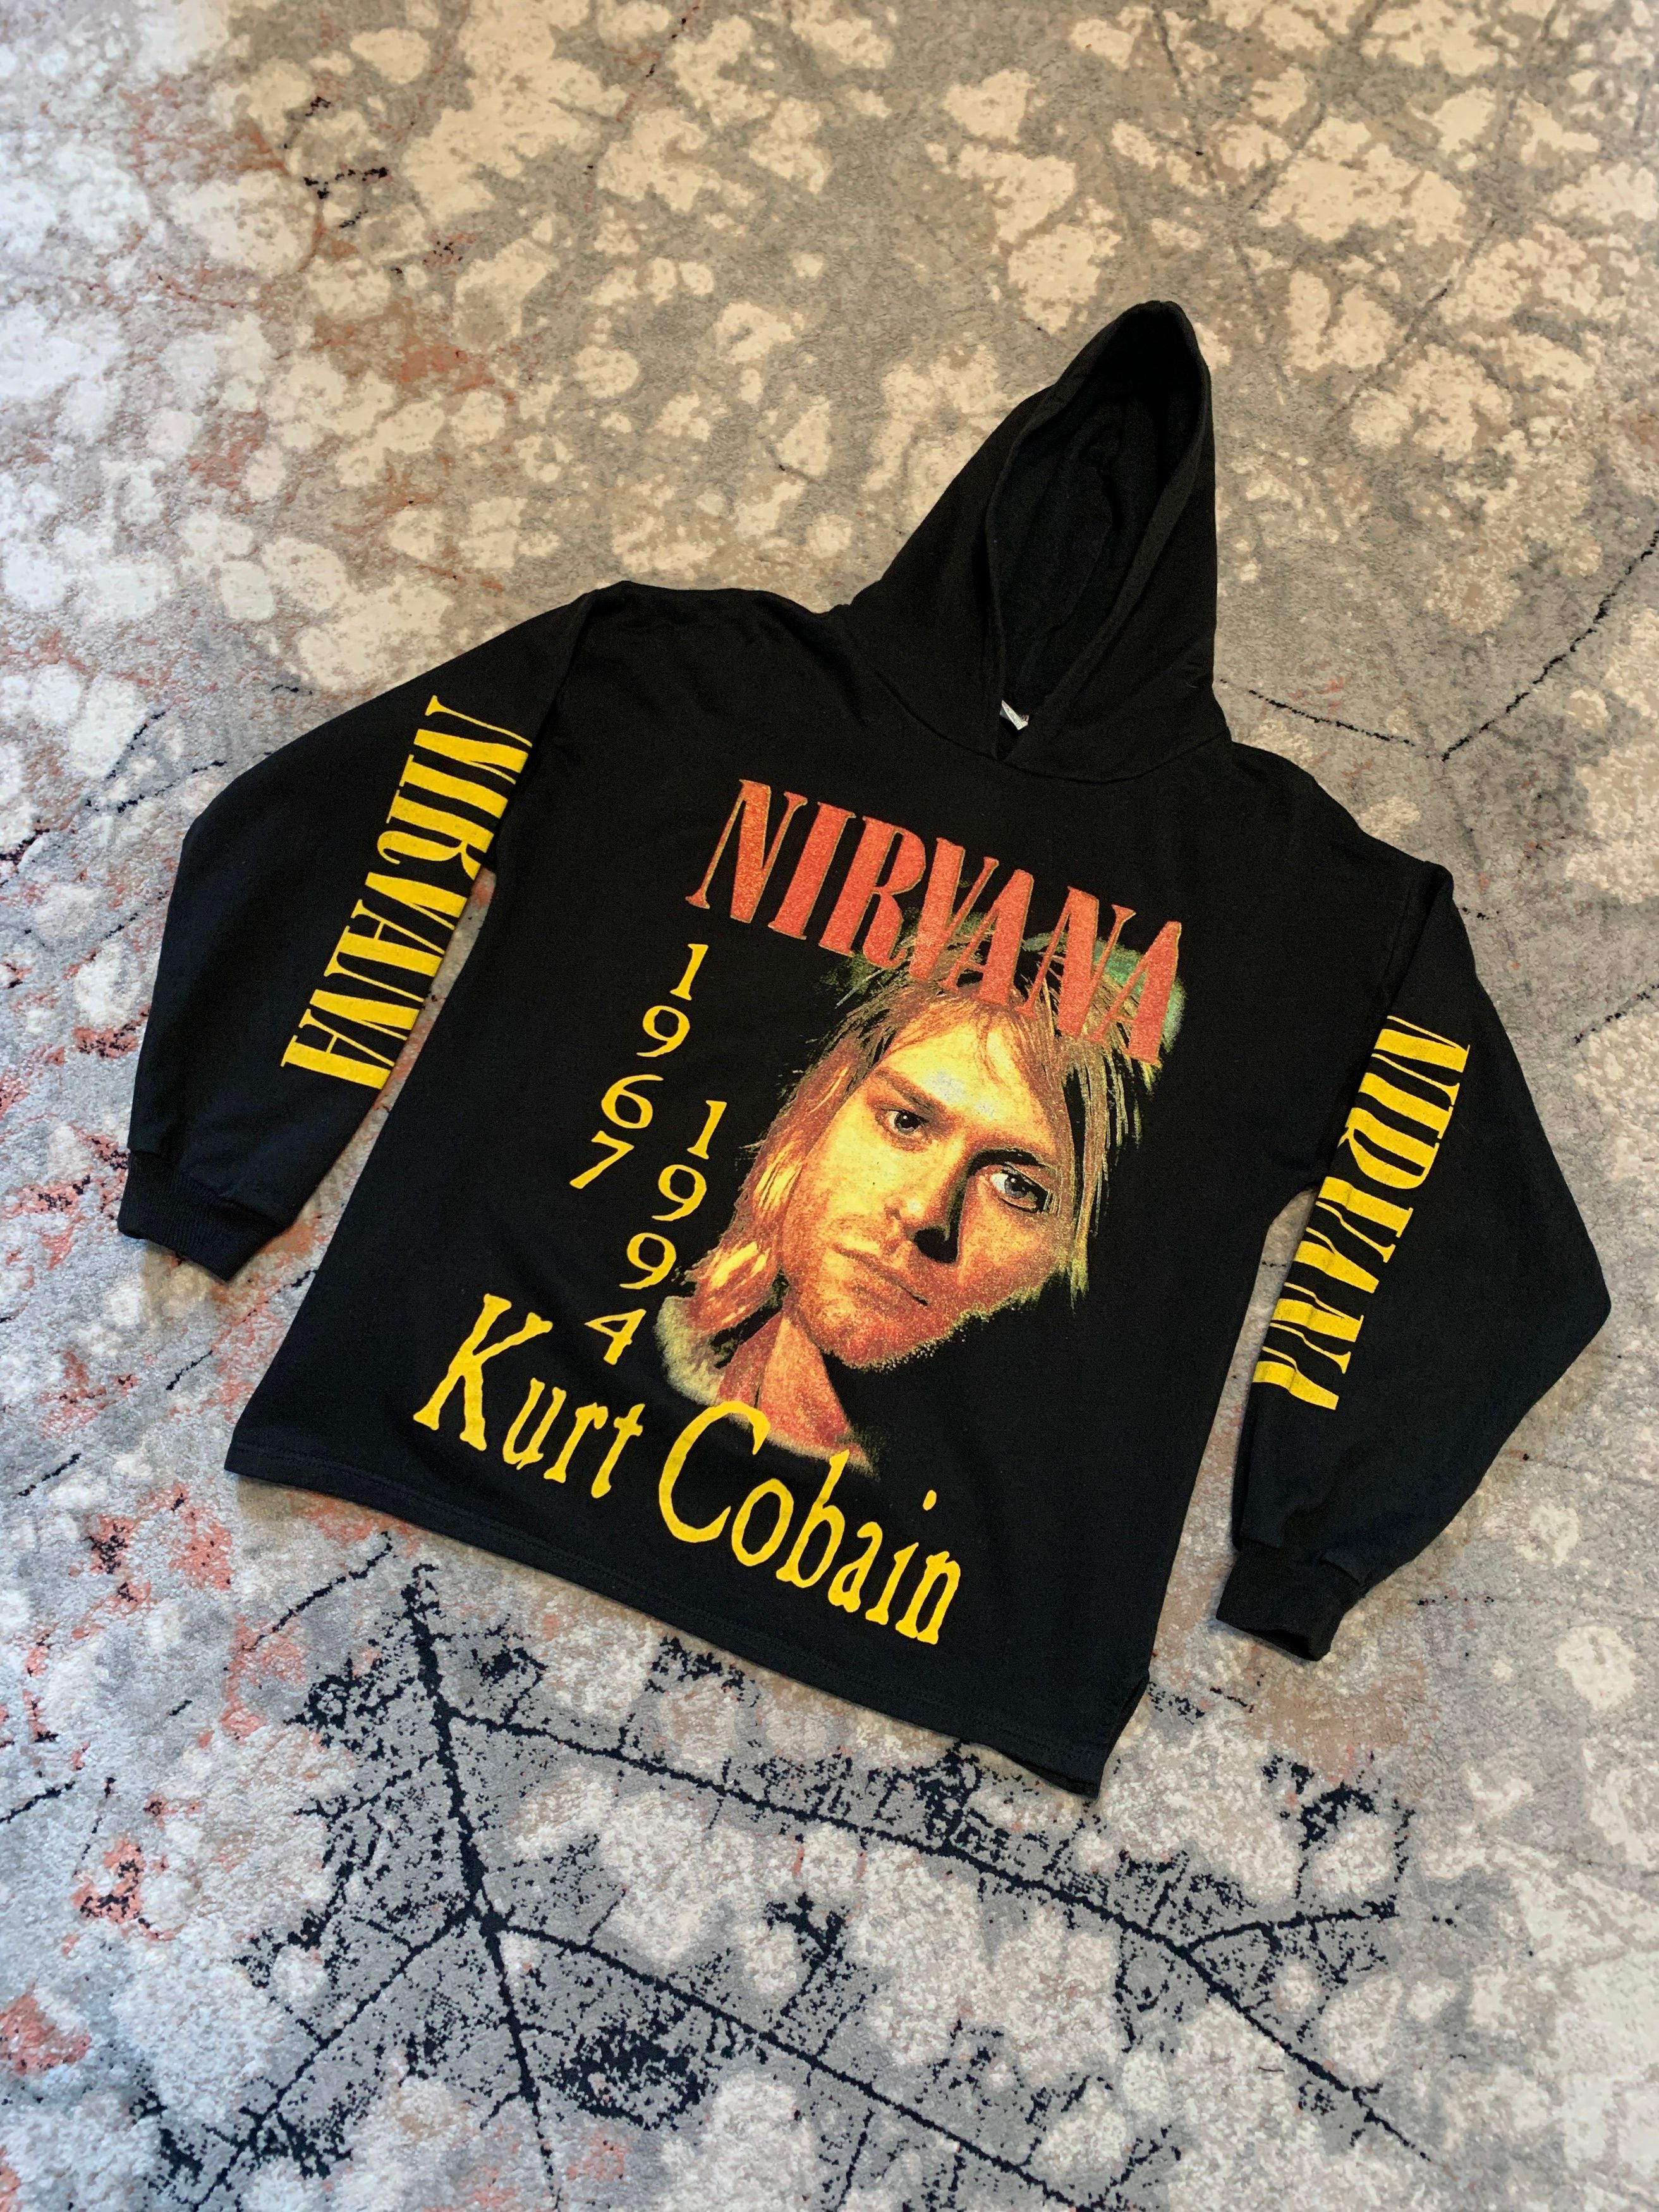 Vintage Nirvana Kurt Cobain 1967-1994 Vintage Bootleg Hoodie Size US S / EU 44-46 / 1 - 3 Thumbnail